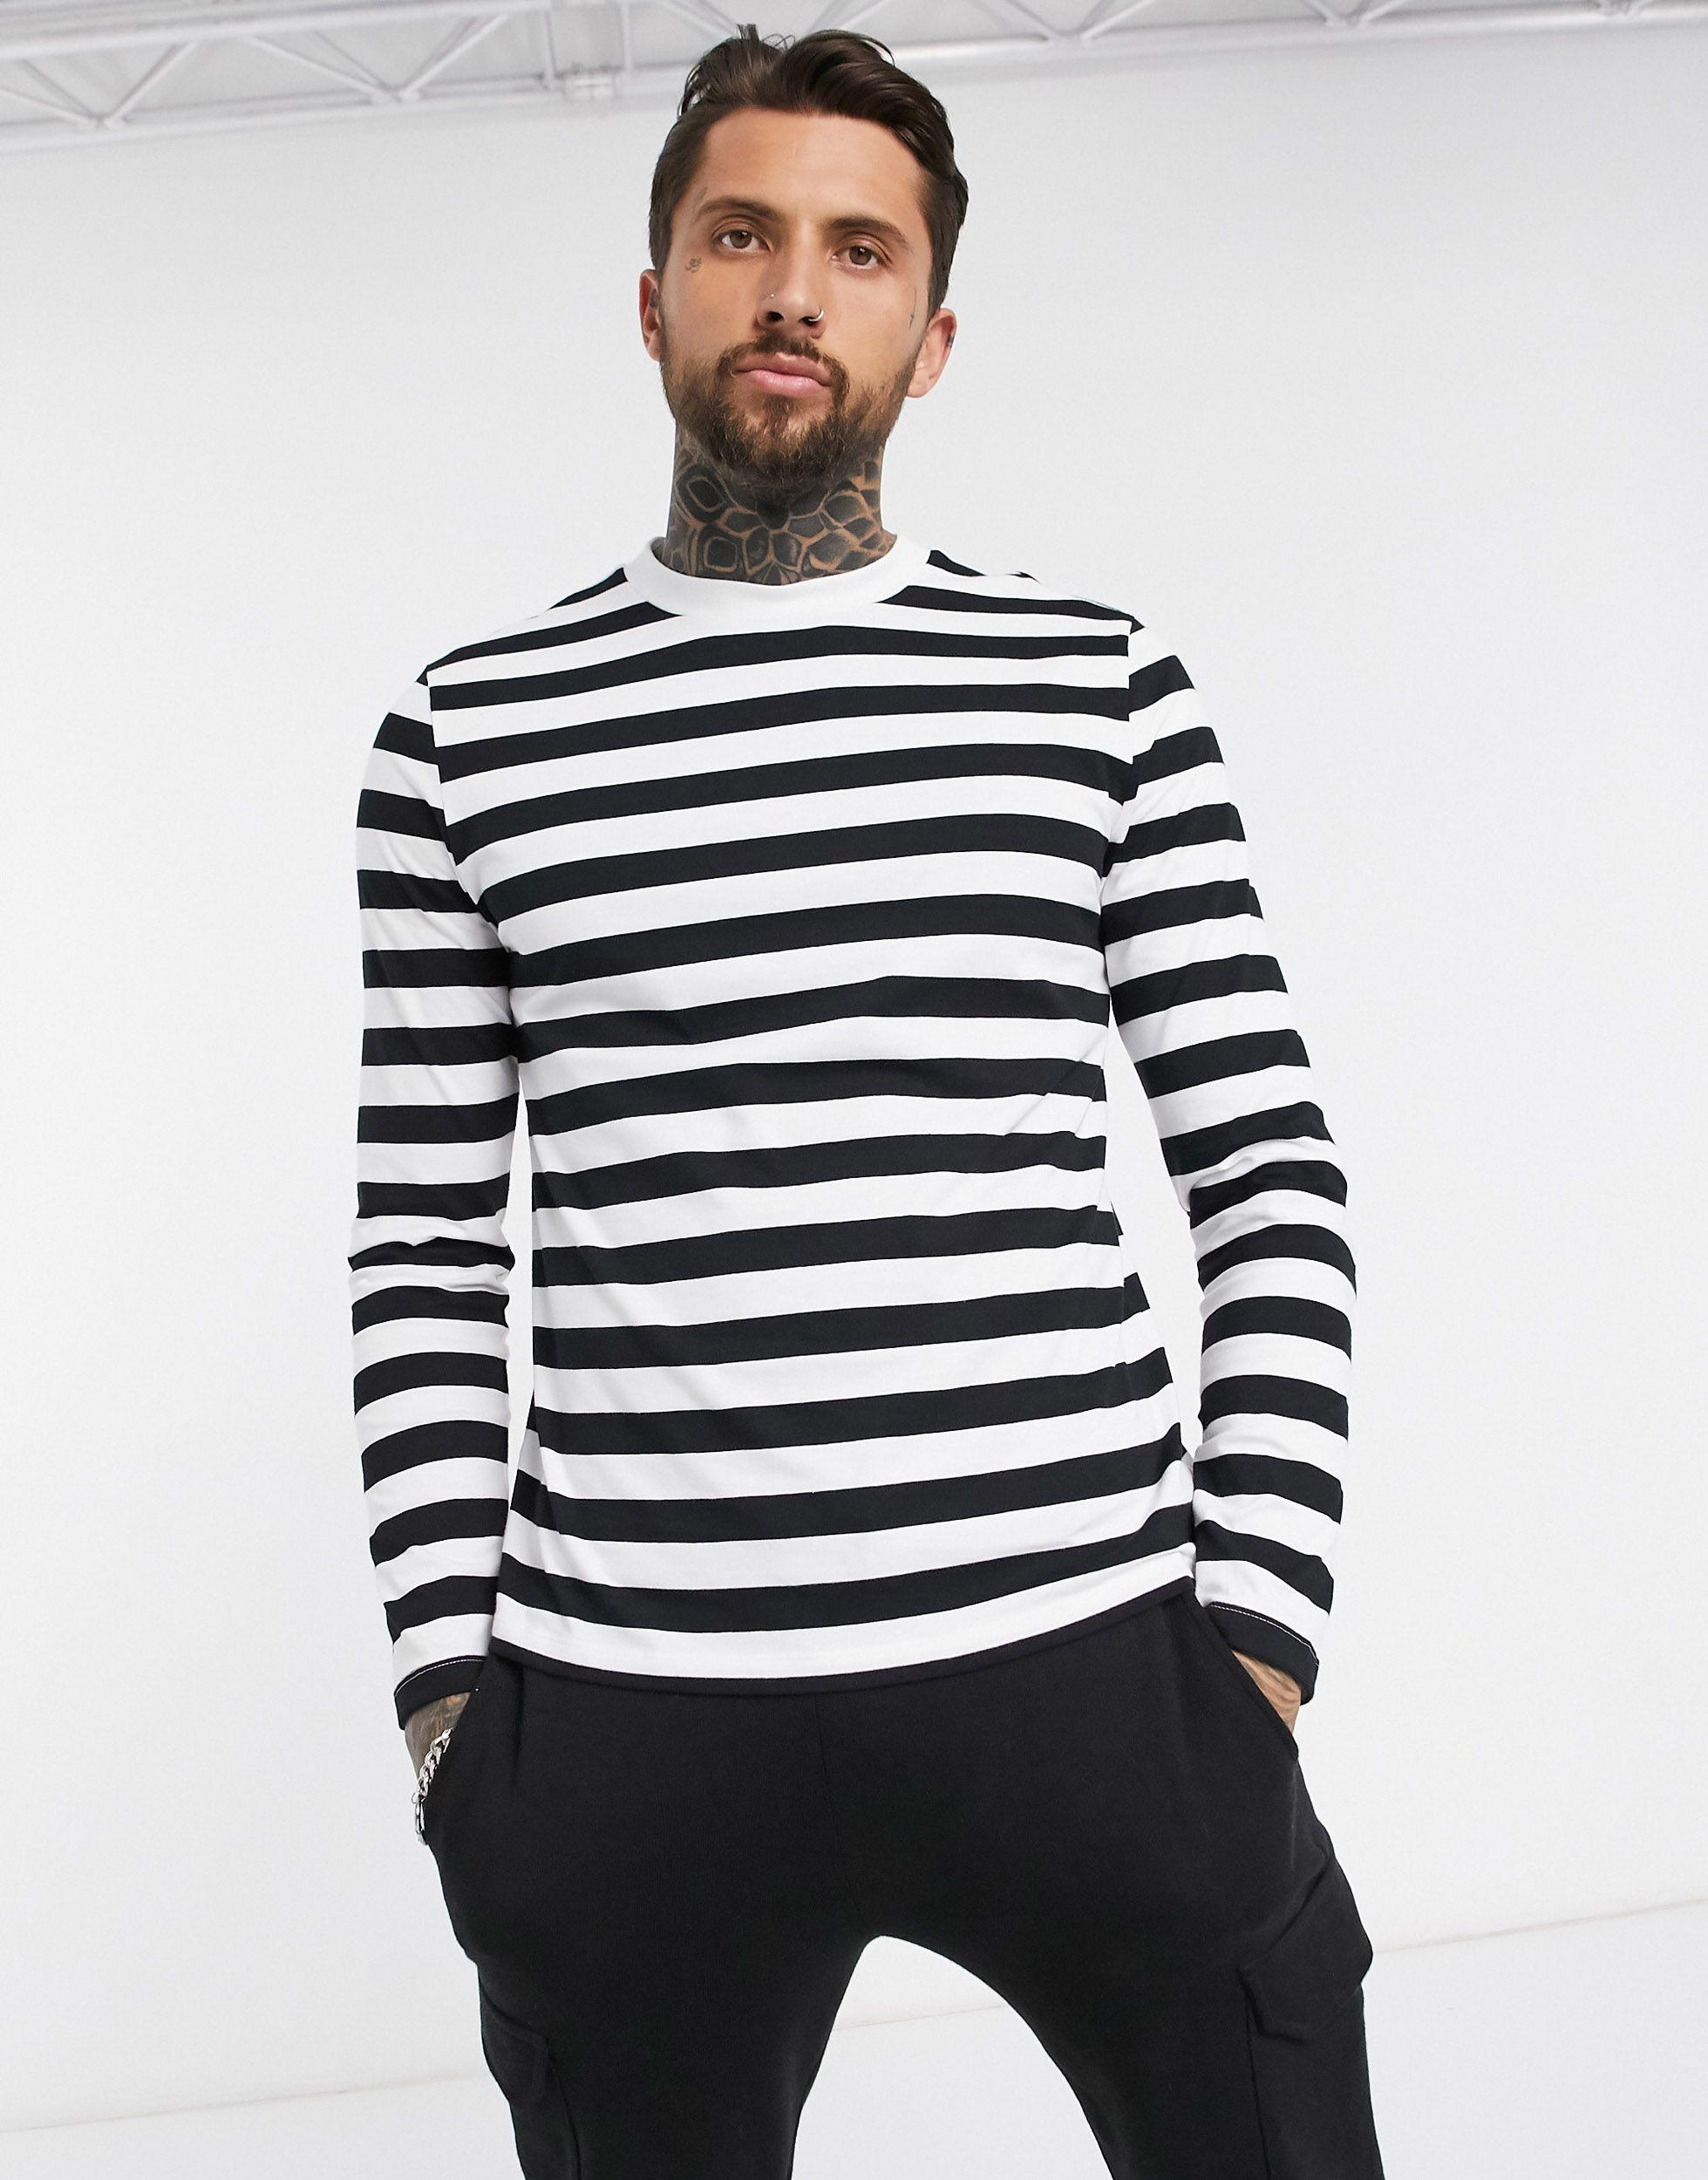 ASOS Long Sleeve Striped T-shirt in Black for Men - Lyst